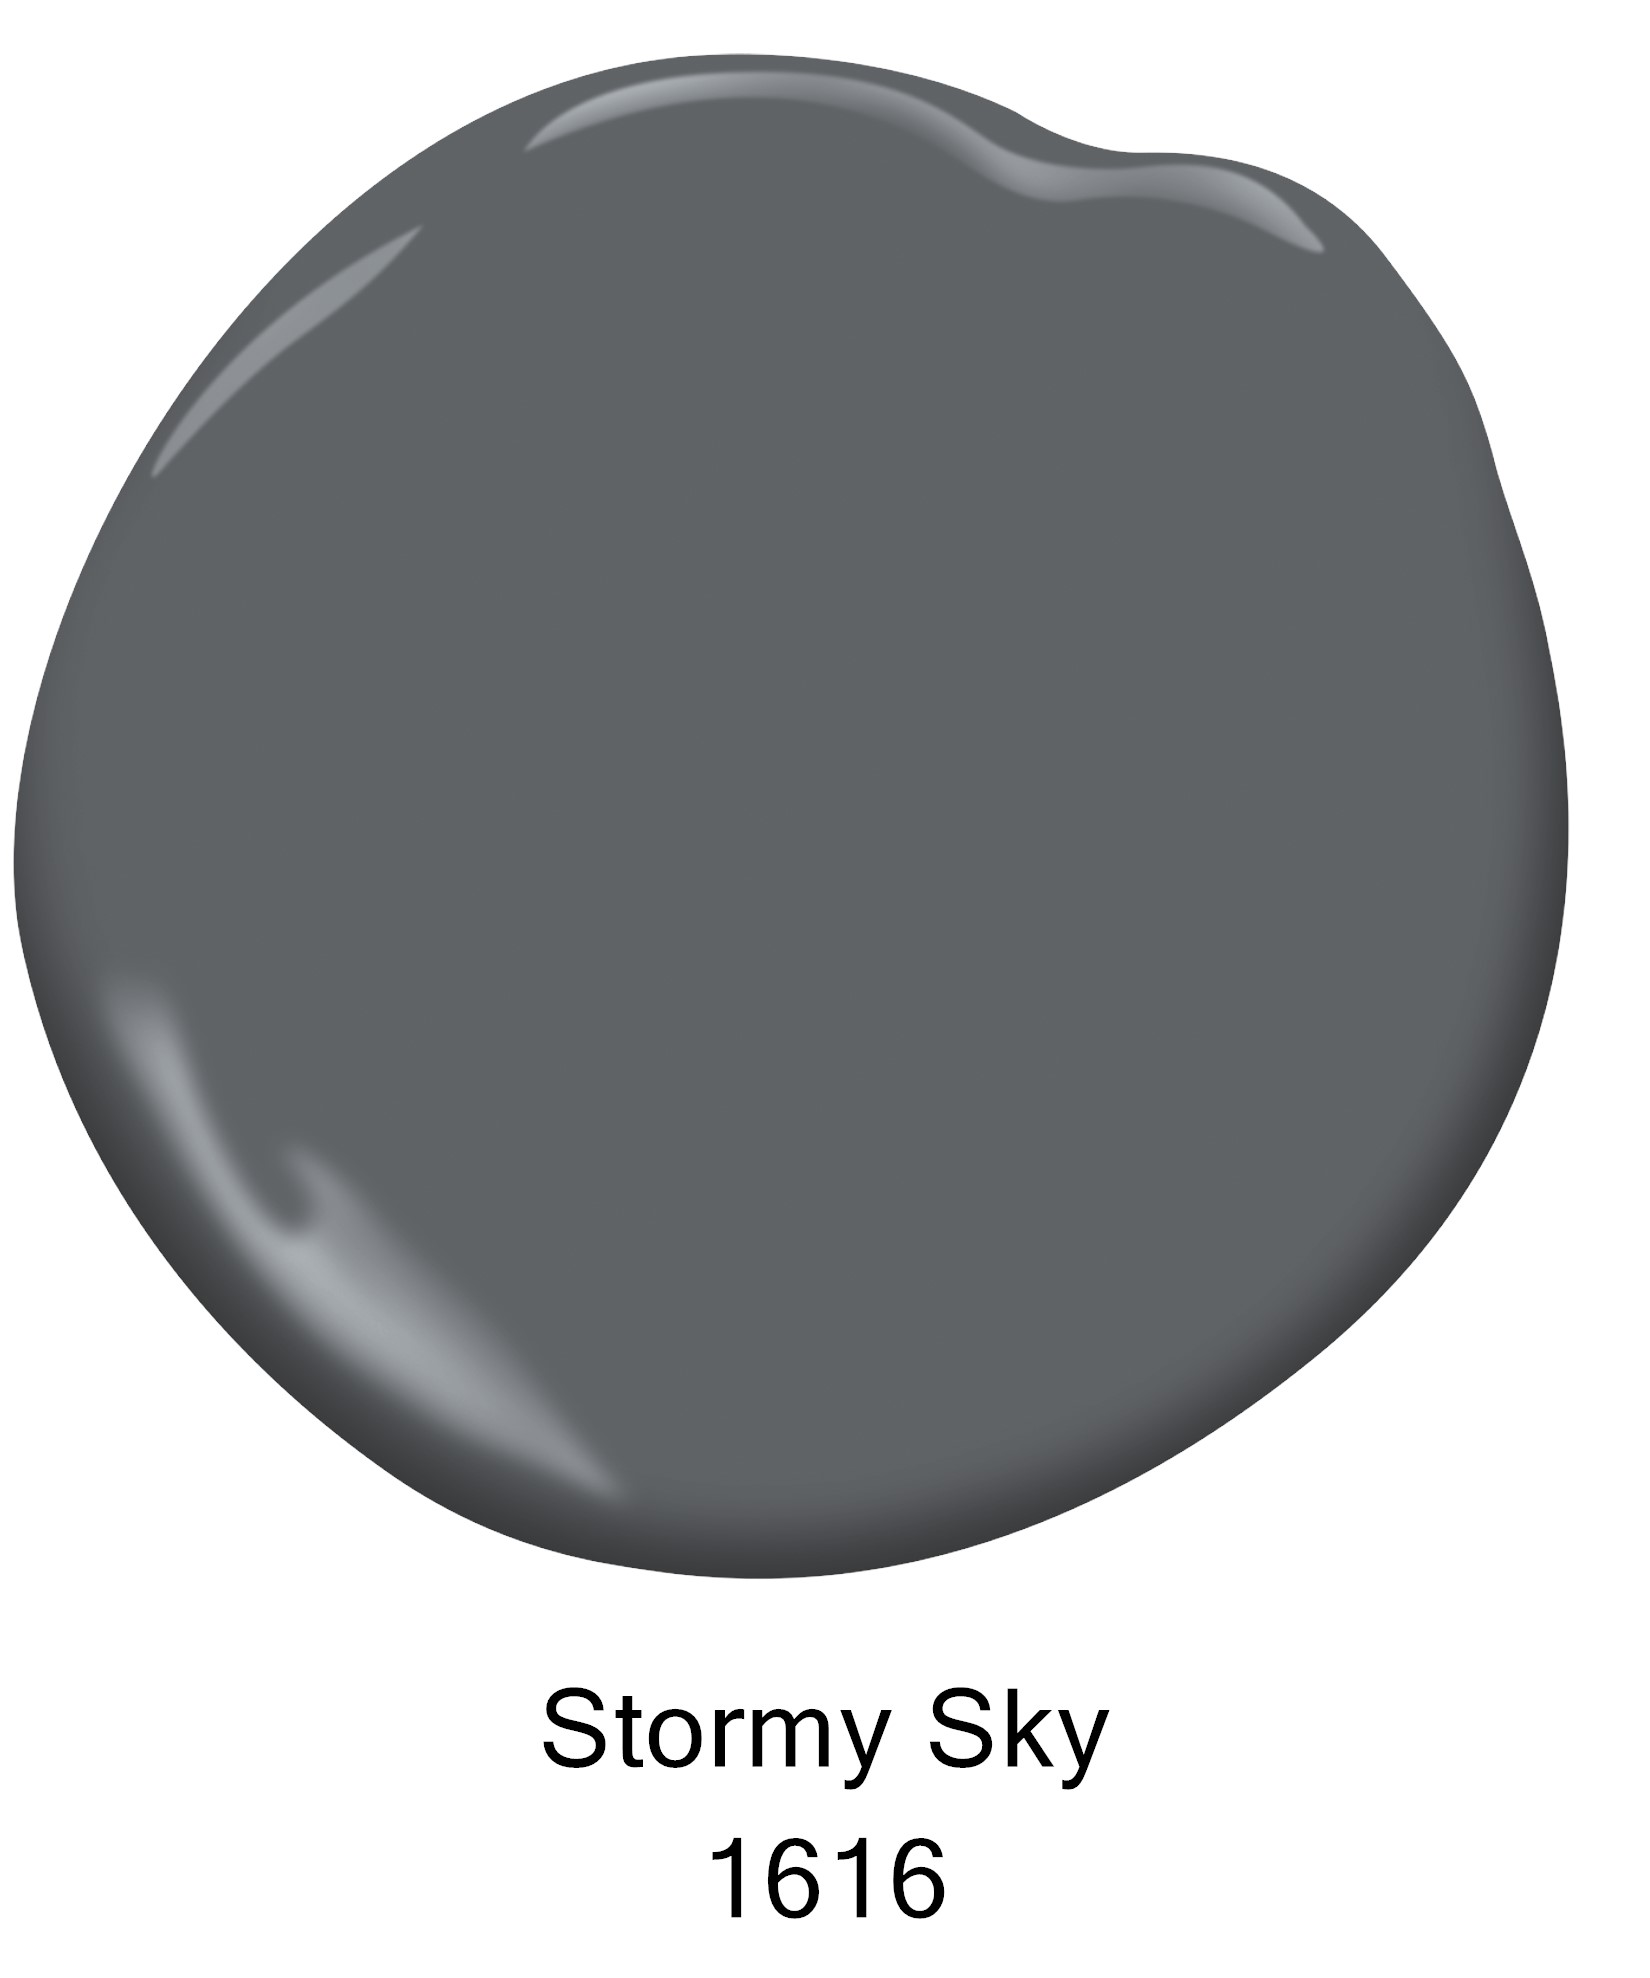 StormySky_1616-0001.jpg